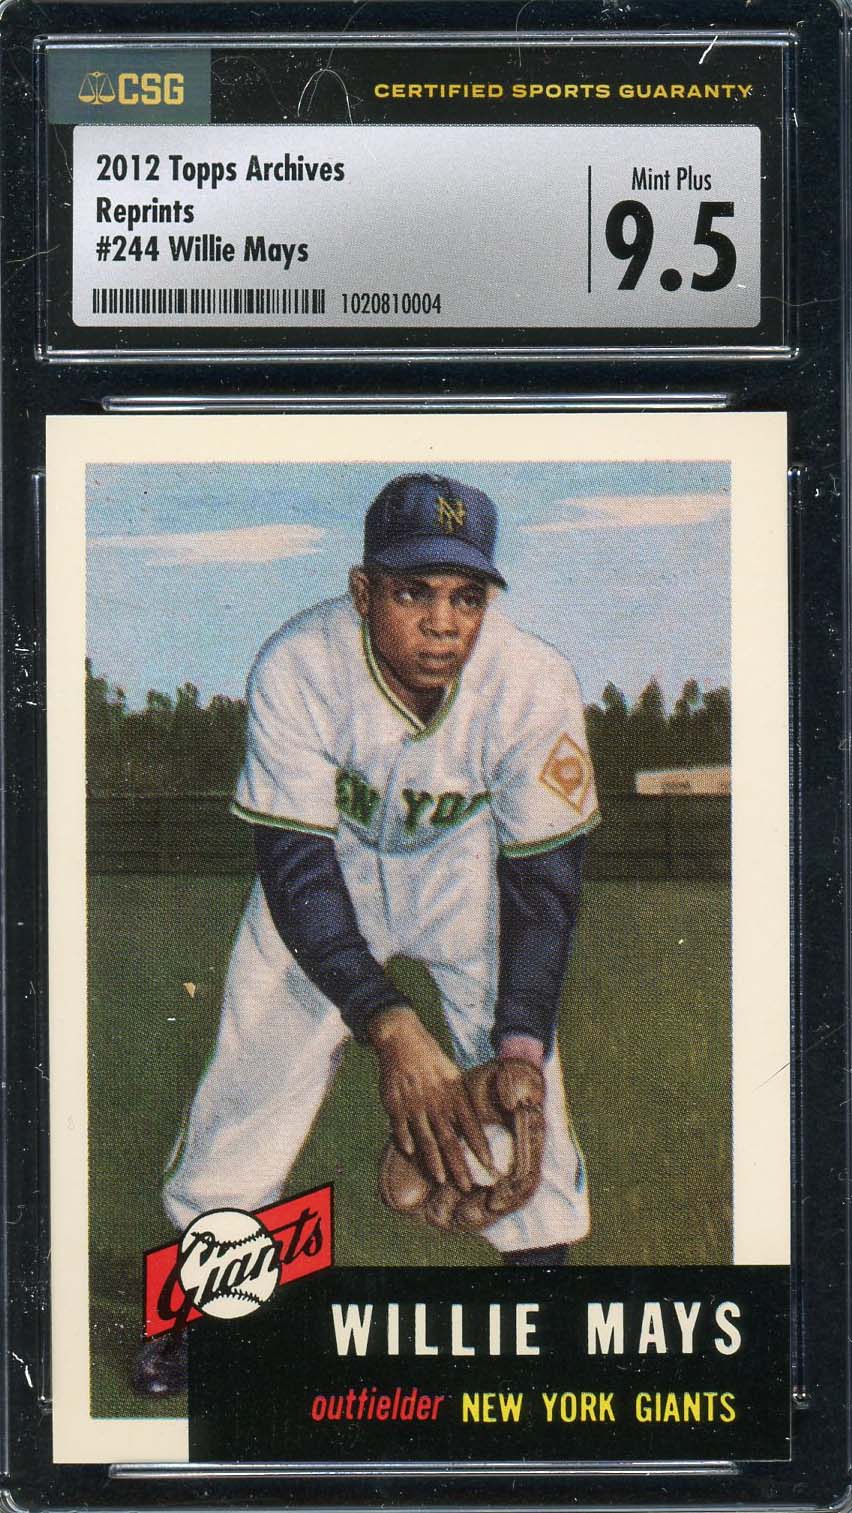 Willie Mays 2012 Topps Archives Baseball Card #244 Graded CSG 9.5